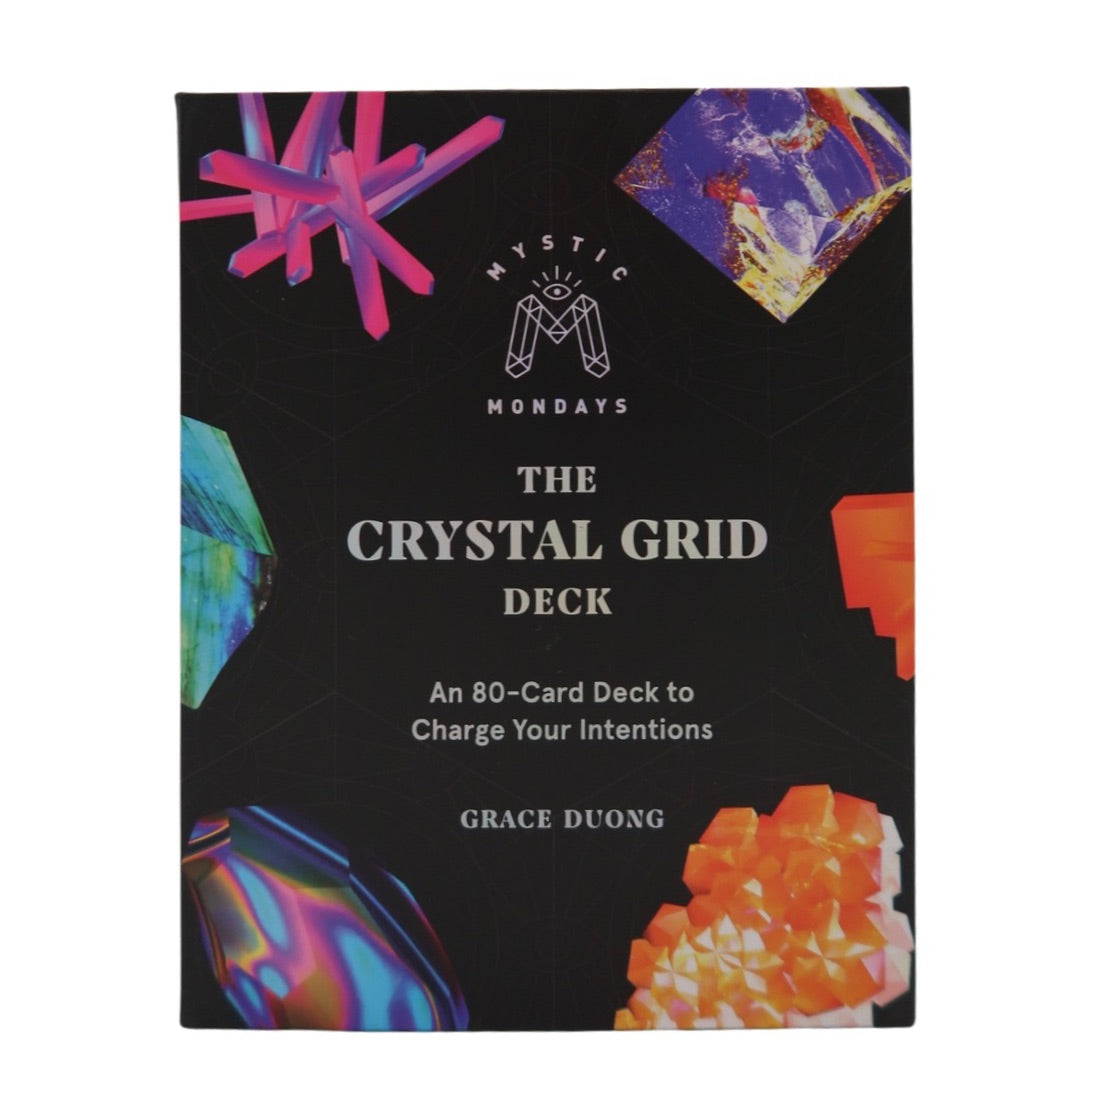 The Crystal Grid Deck